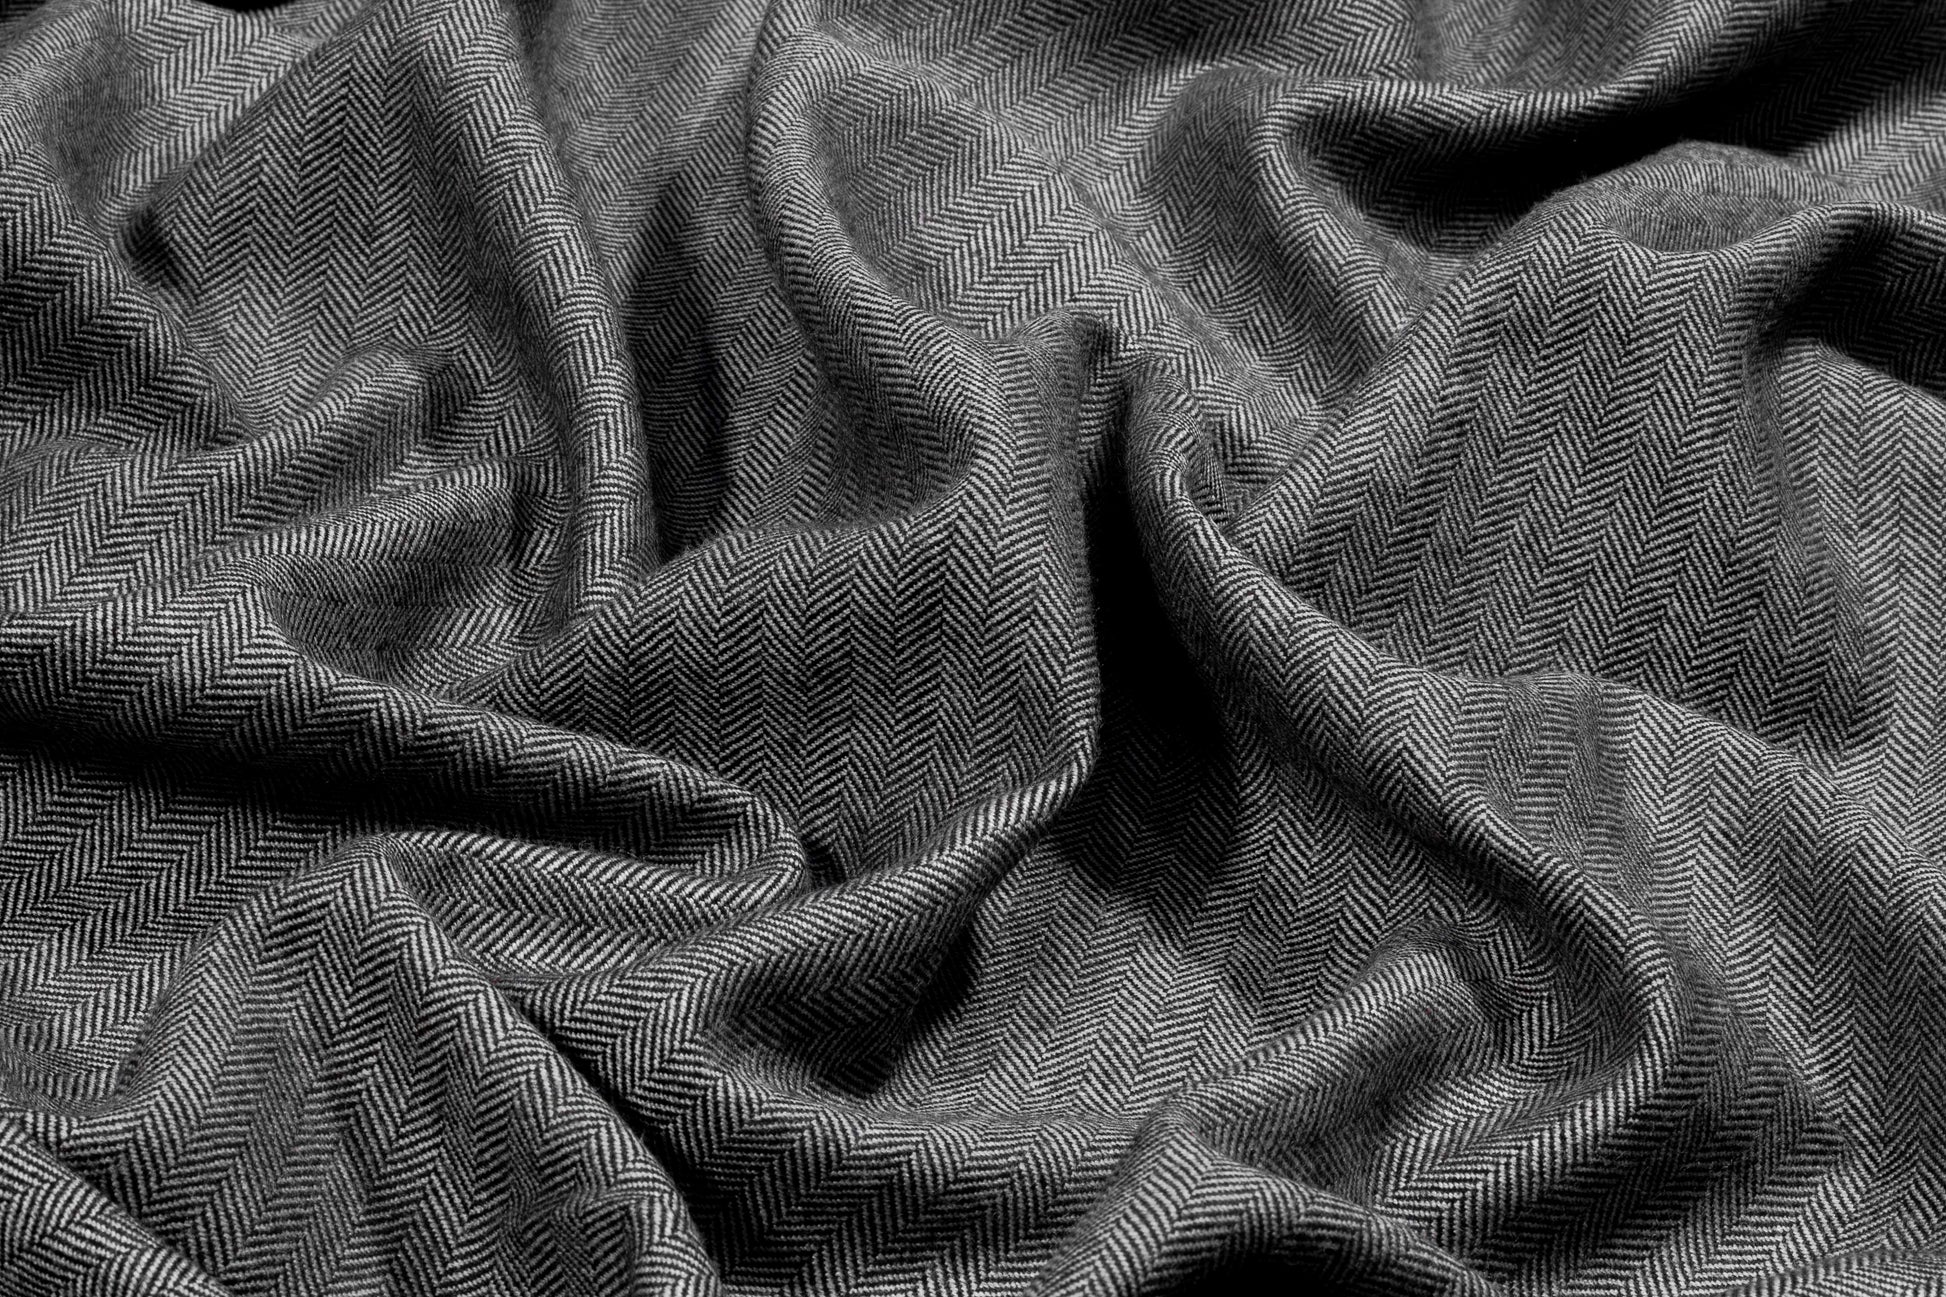 Gray Herringbone Italian Wool Suiting - Prime Fabrics